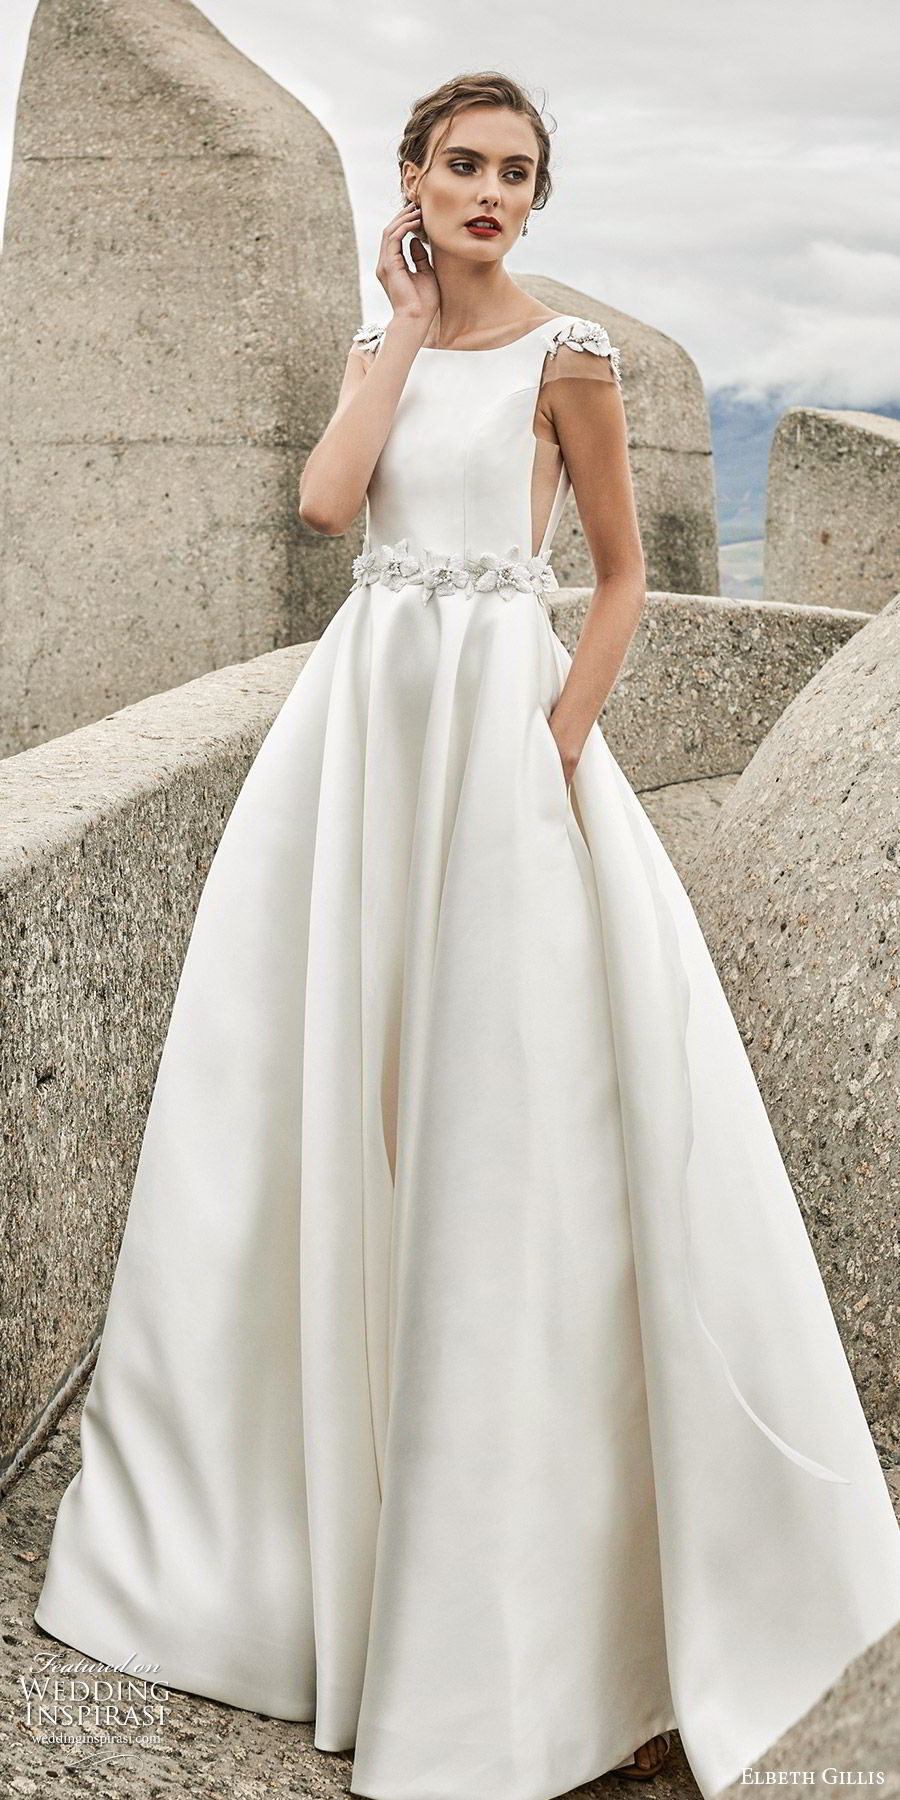 elbeth gillis 2020 bridal illusion cap sleeves bateau neckline side cutout beaded waist a line ball gown wedding dress (4) romantic princess v back chapel train mv